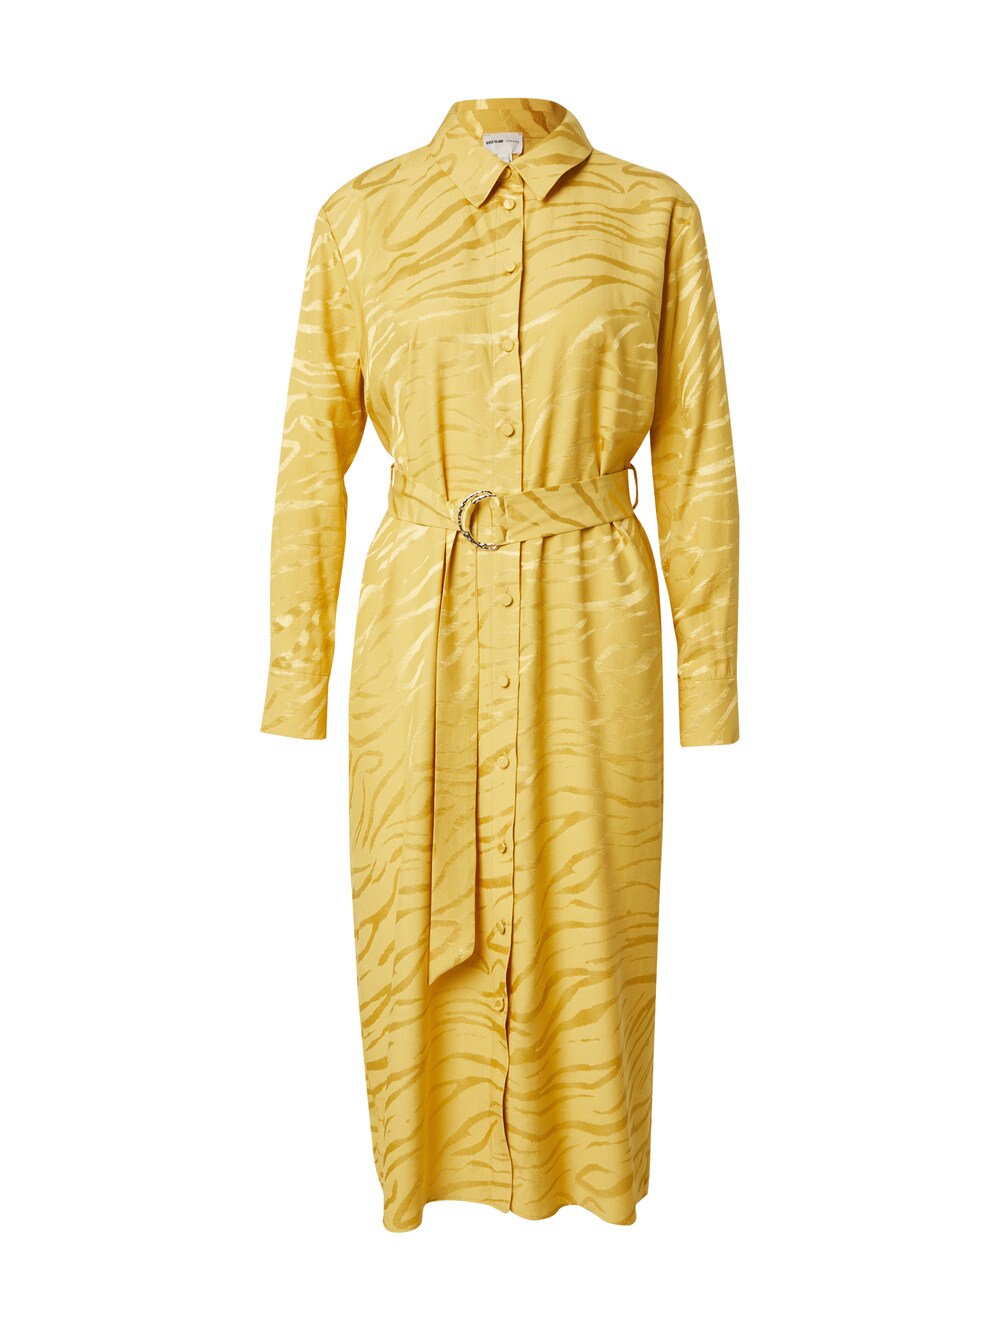 Рубашка-платье River Island, желтое/желтое золото цена и фото